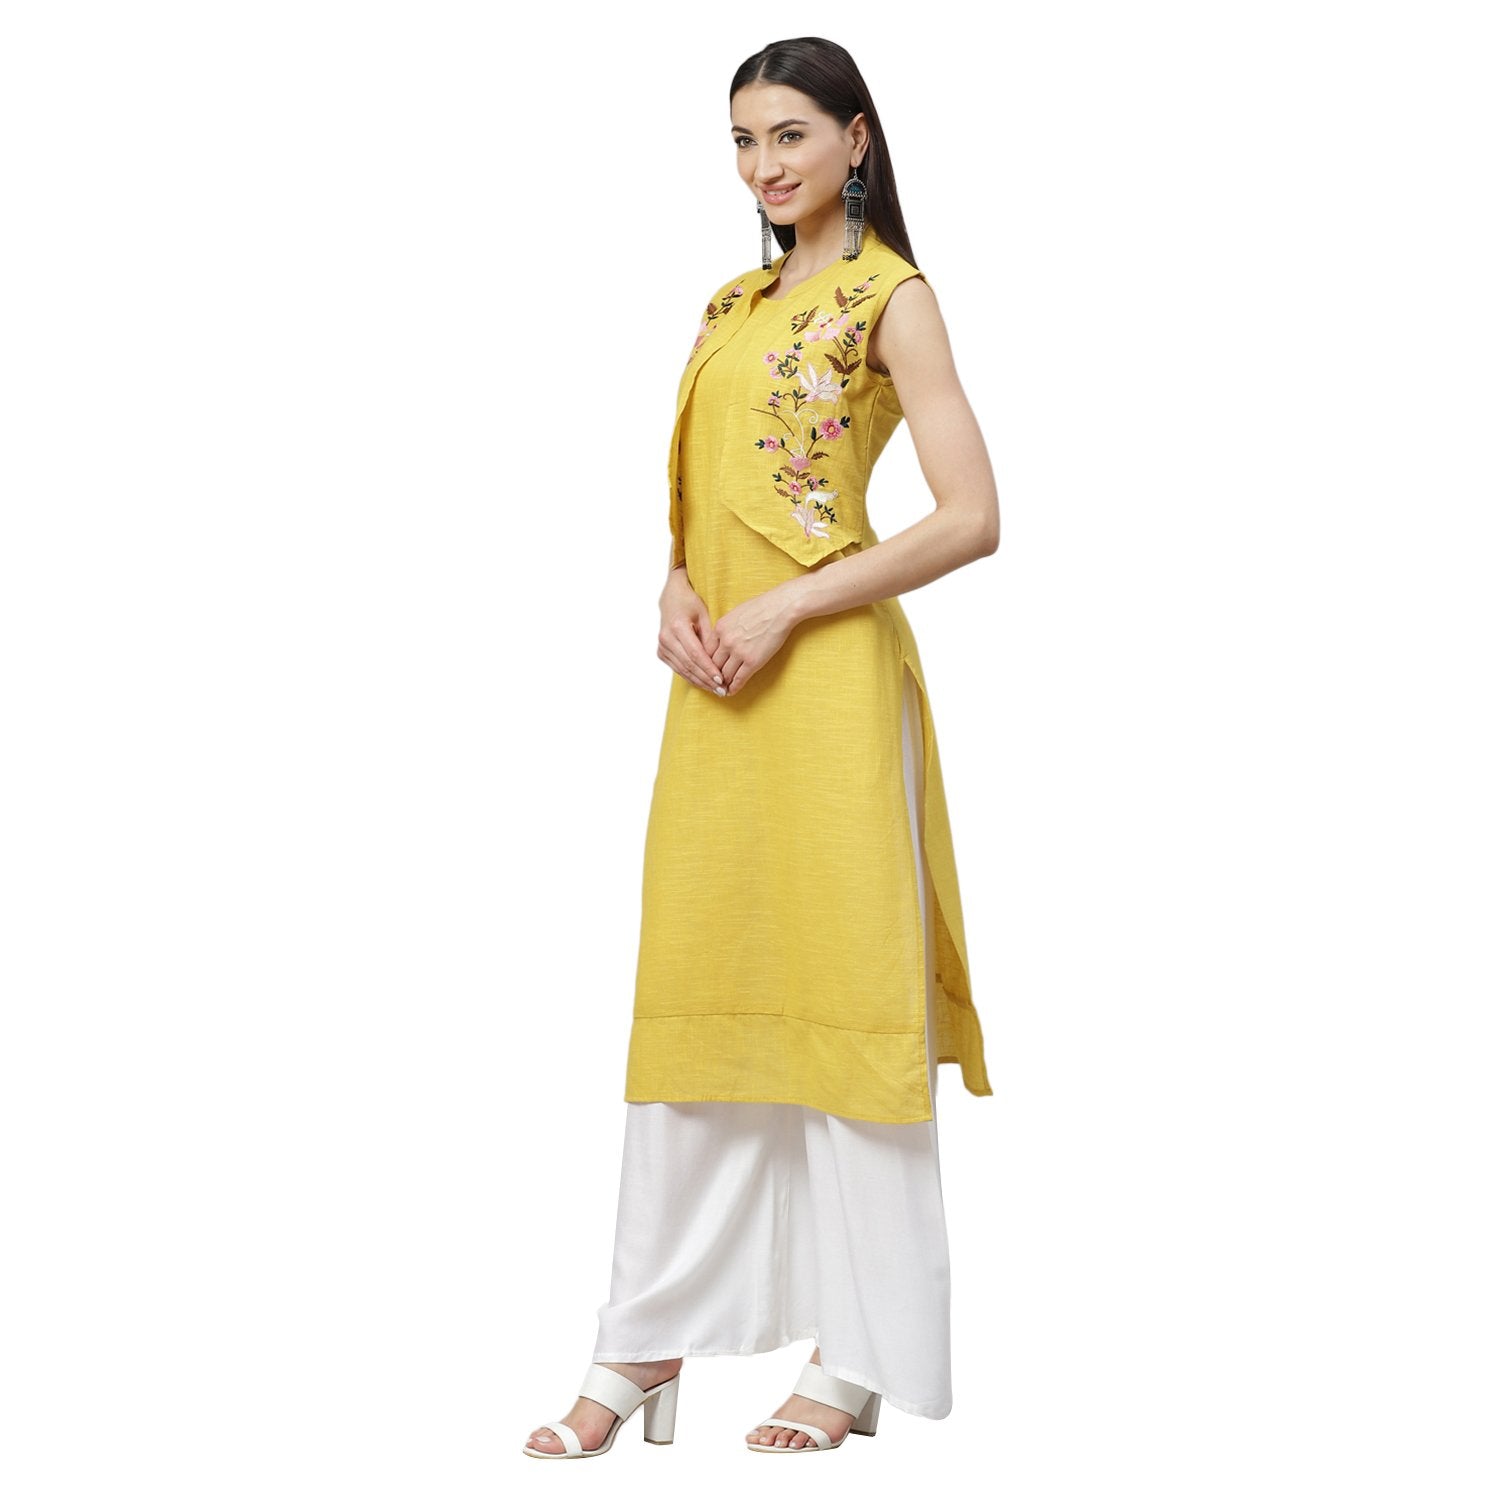 Women's Yellow Cotton Slub Printed Sleeveless Round Neck Casual Dress - Myshka